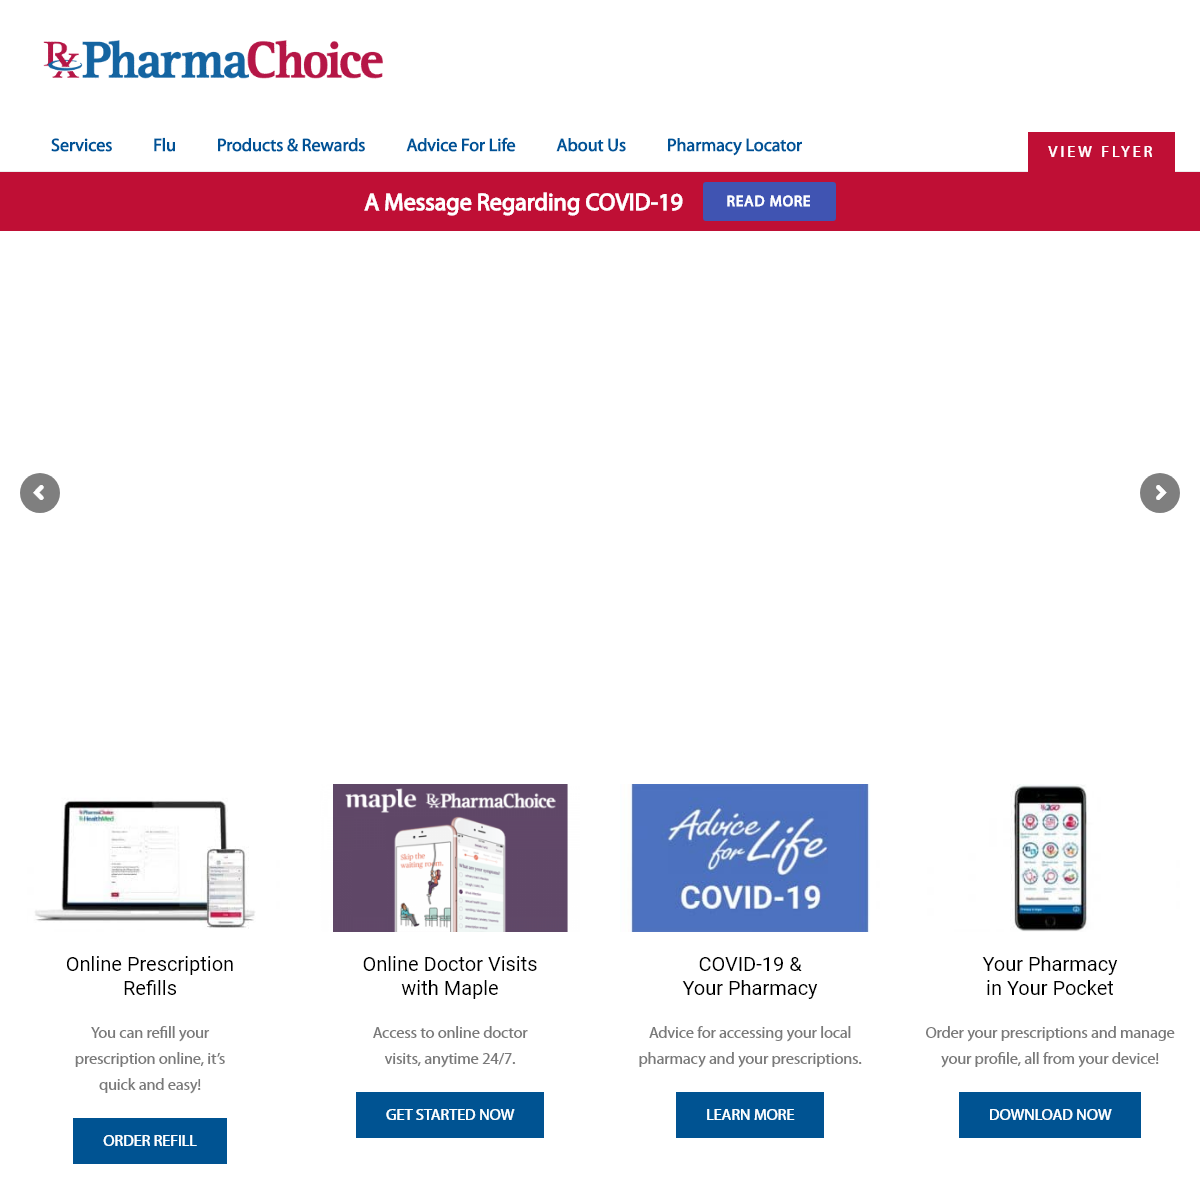 A complete backup of pharmachoice.com